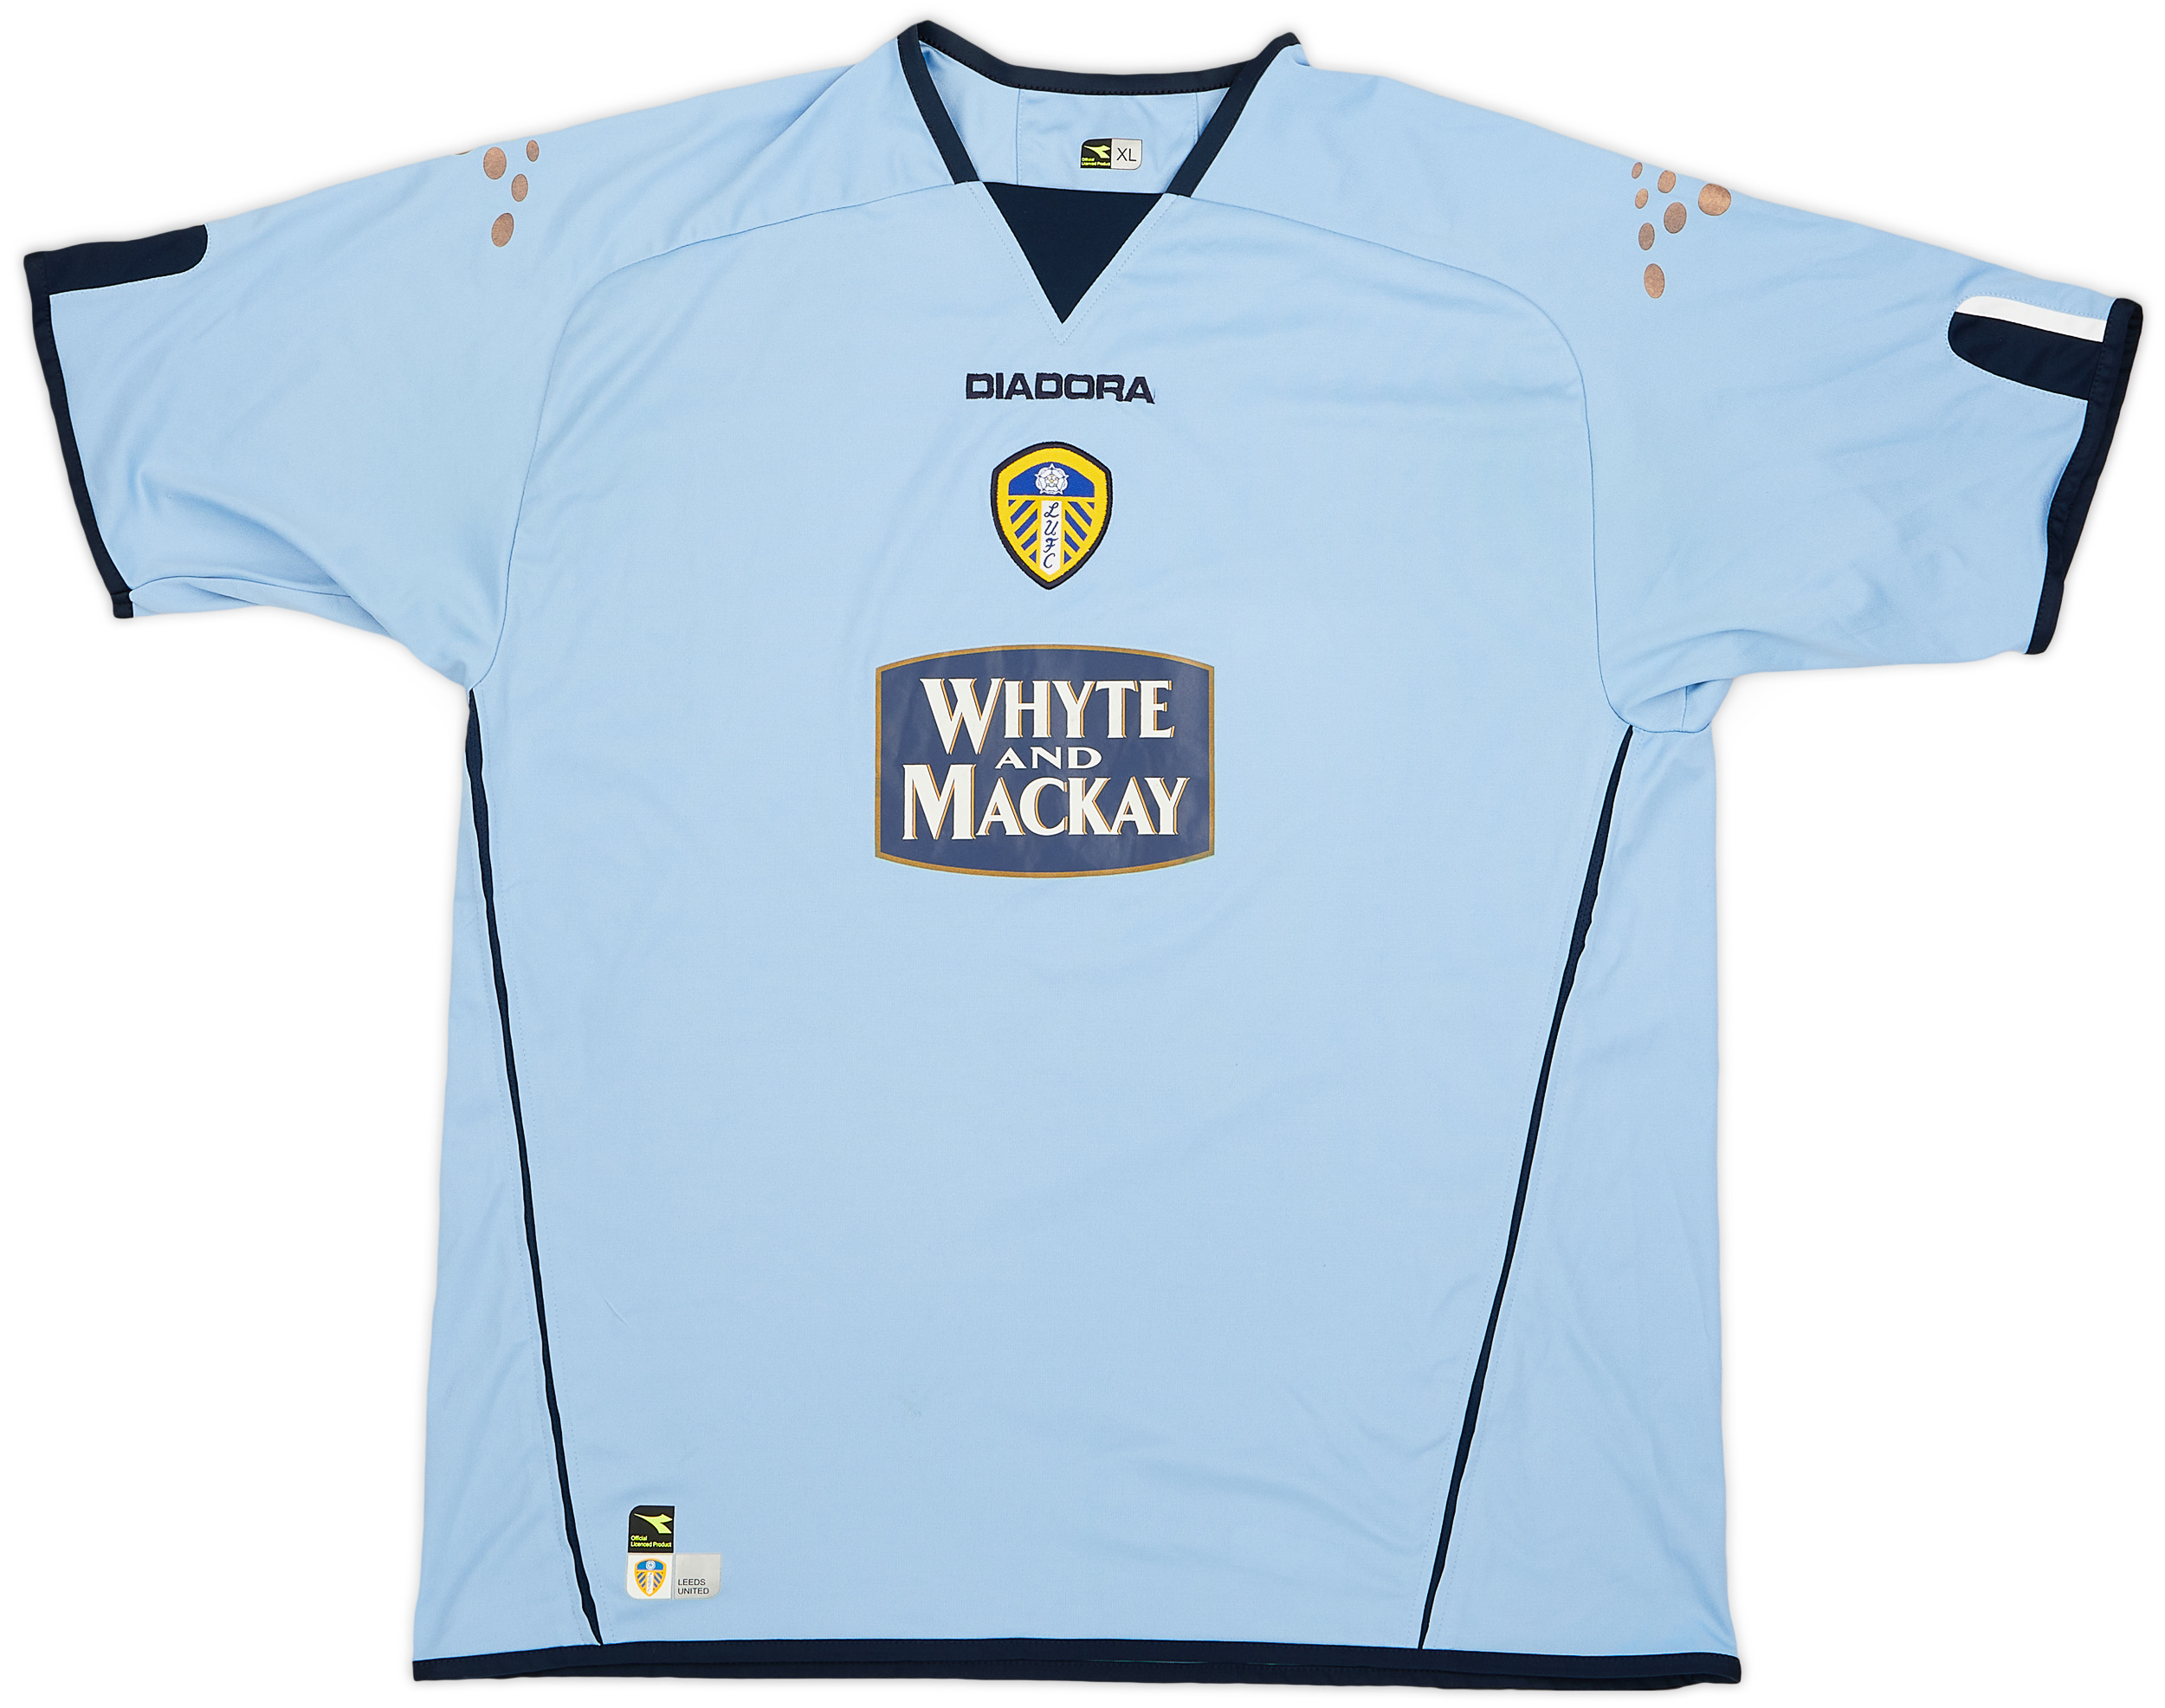 2004-05 Leeds United Away Shirt - 8/10 - ()